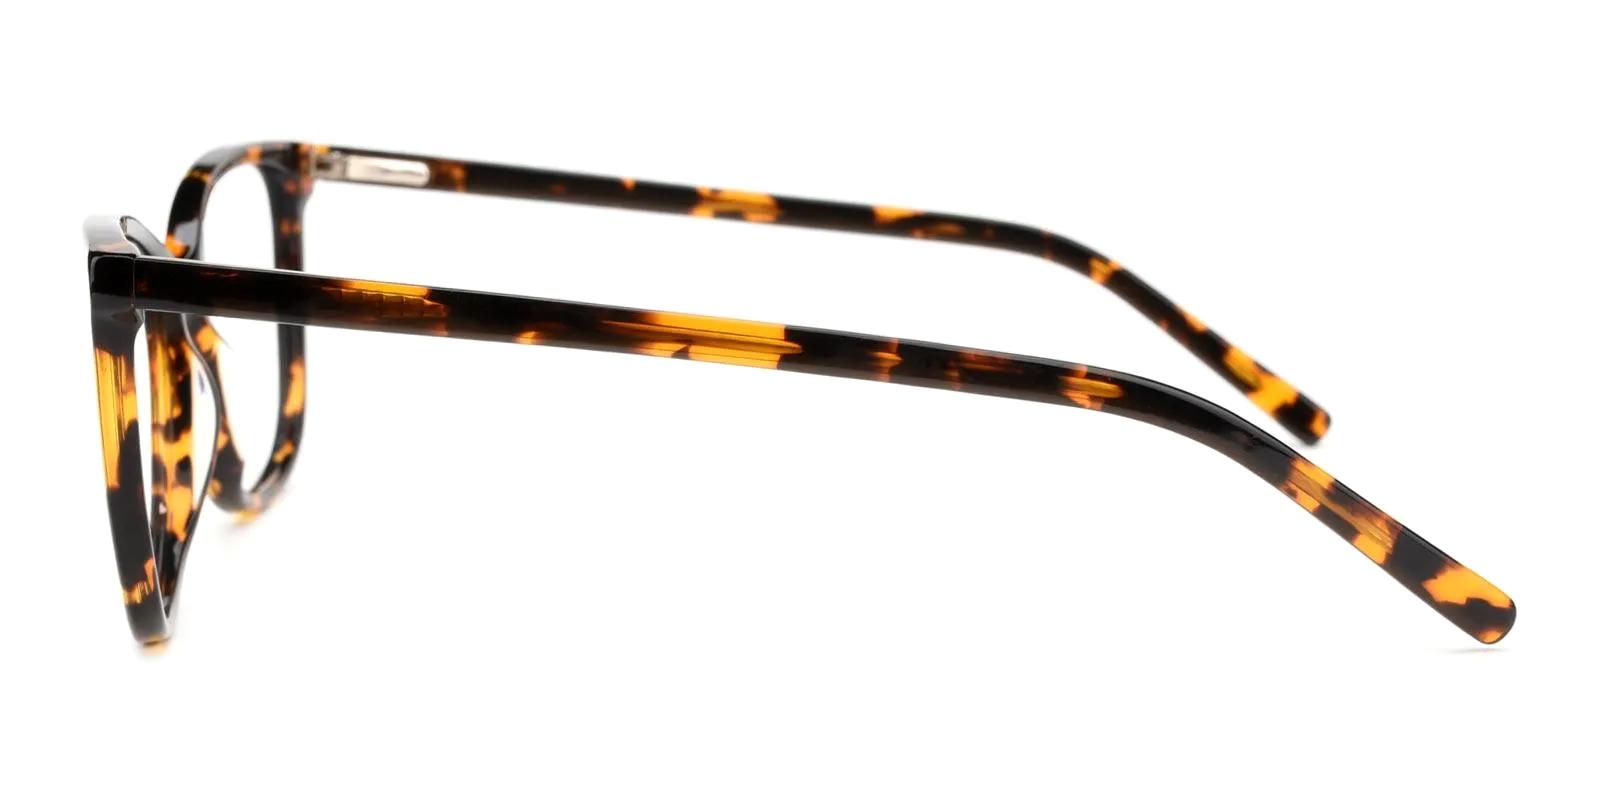 Viola Tortoise Acetate Eyeglasses , Fashion , SpringHinges , UniversalBridgeFit Frames from ABBE Glasses